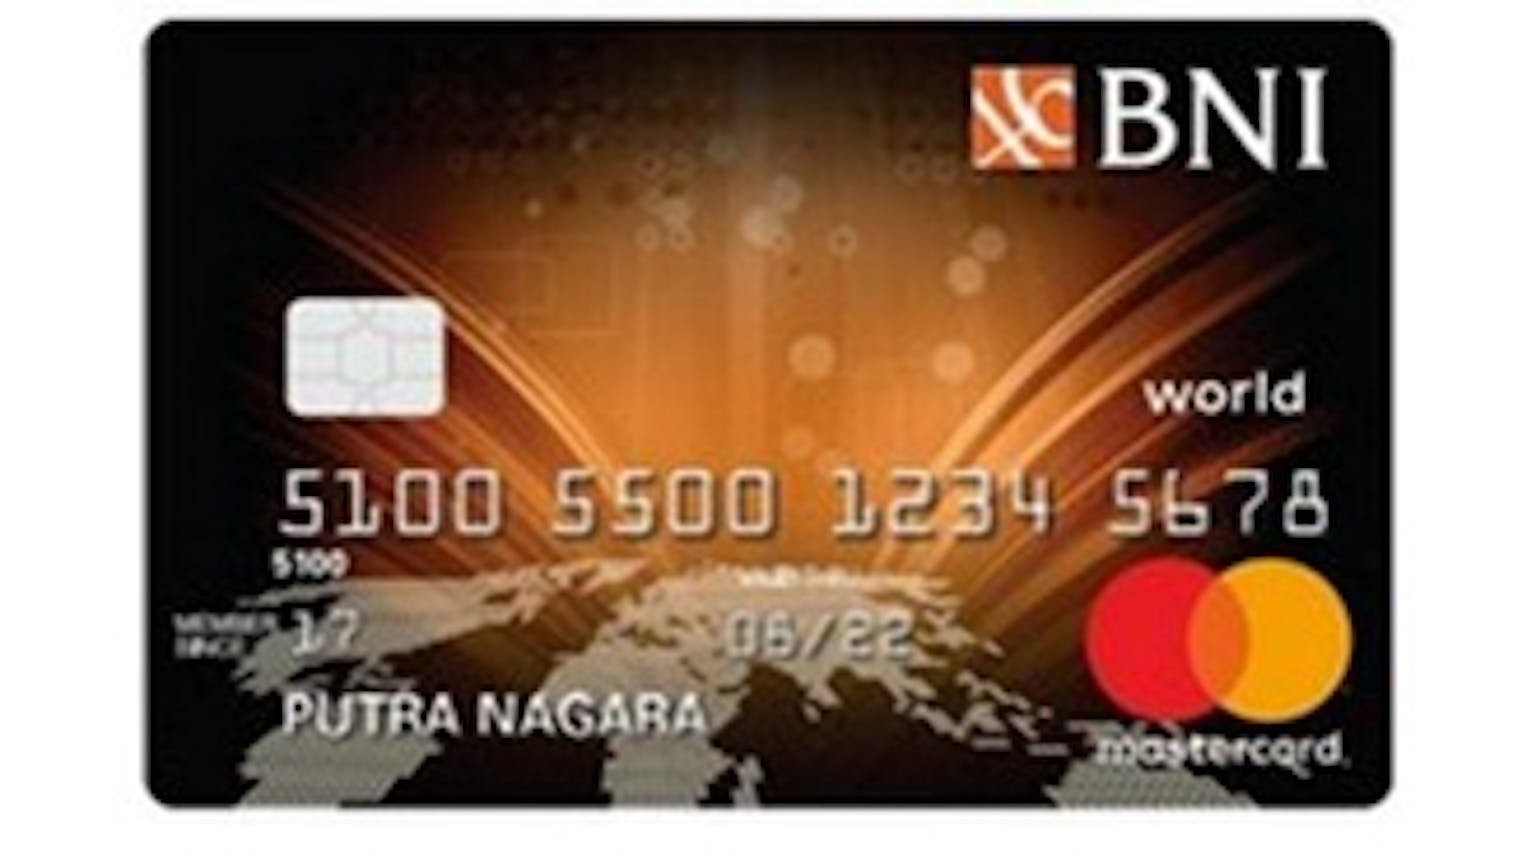 BNI MasterCard World